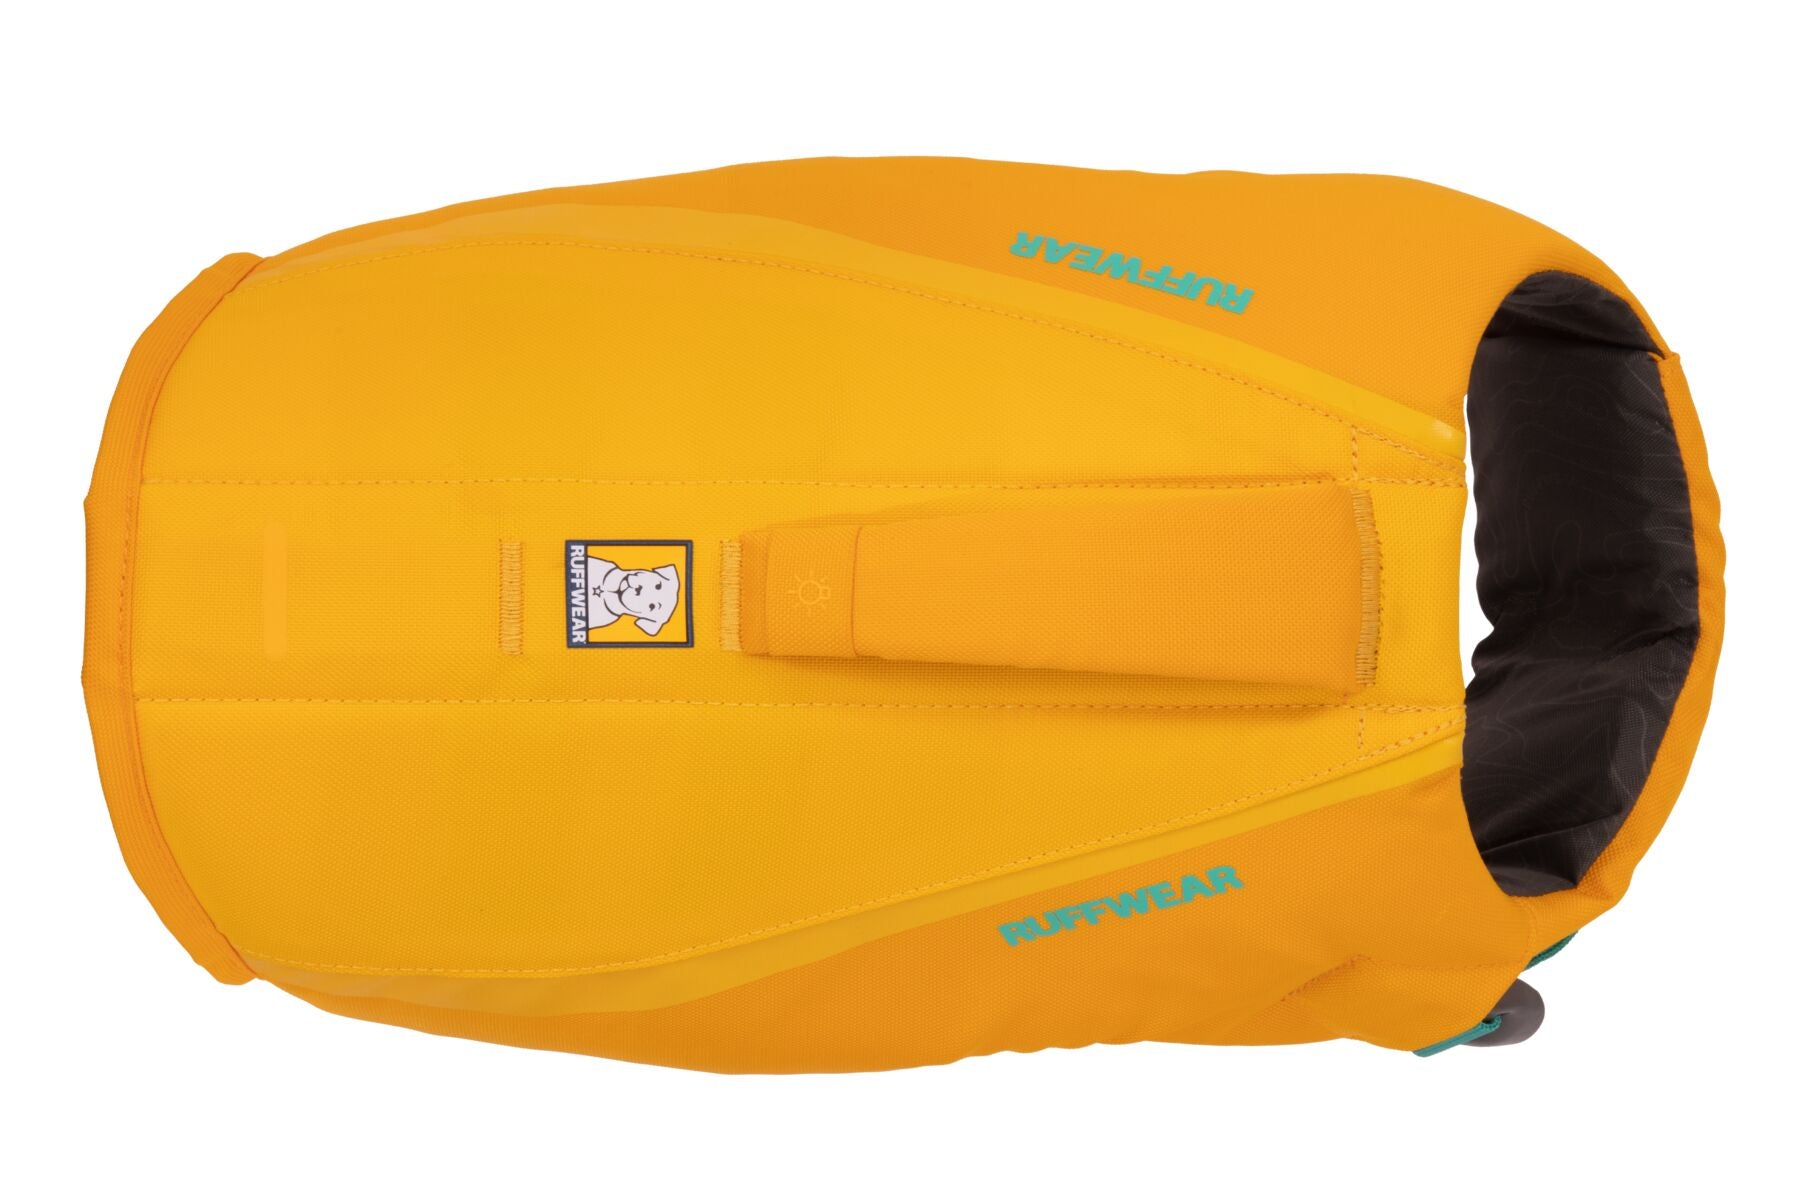 Chaleco Salvavidas para Perros Naranja (Wave Orange) - K-9 Float Coat de Ruffwear®